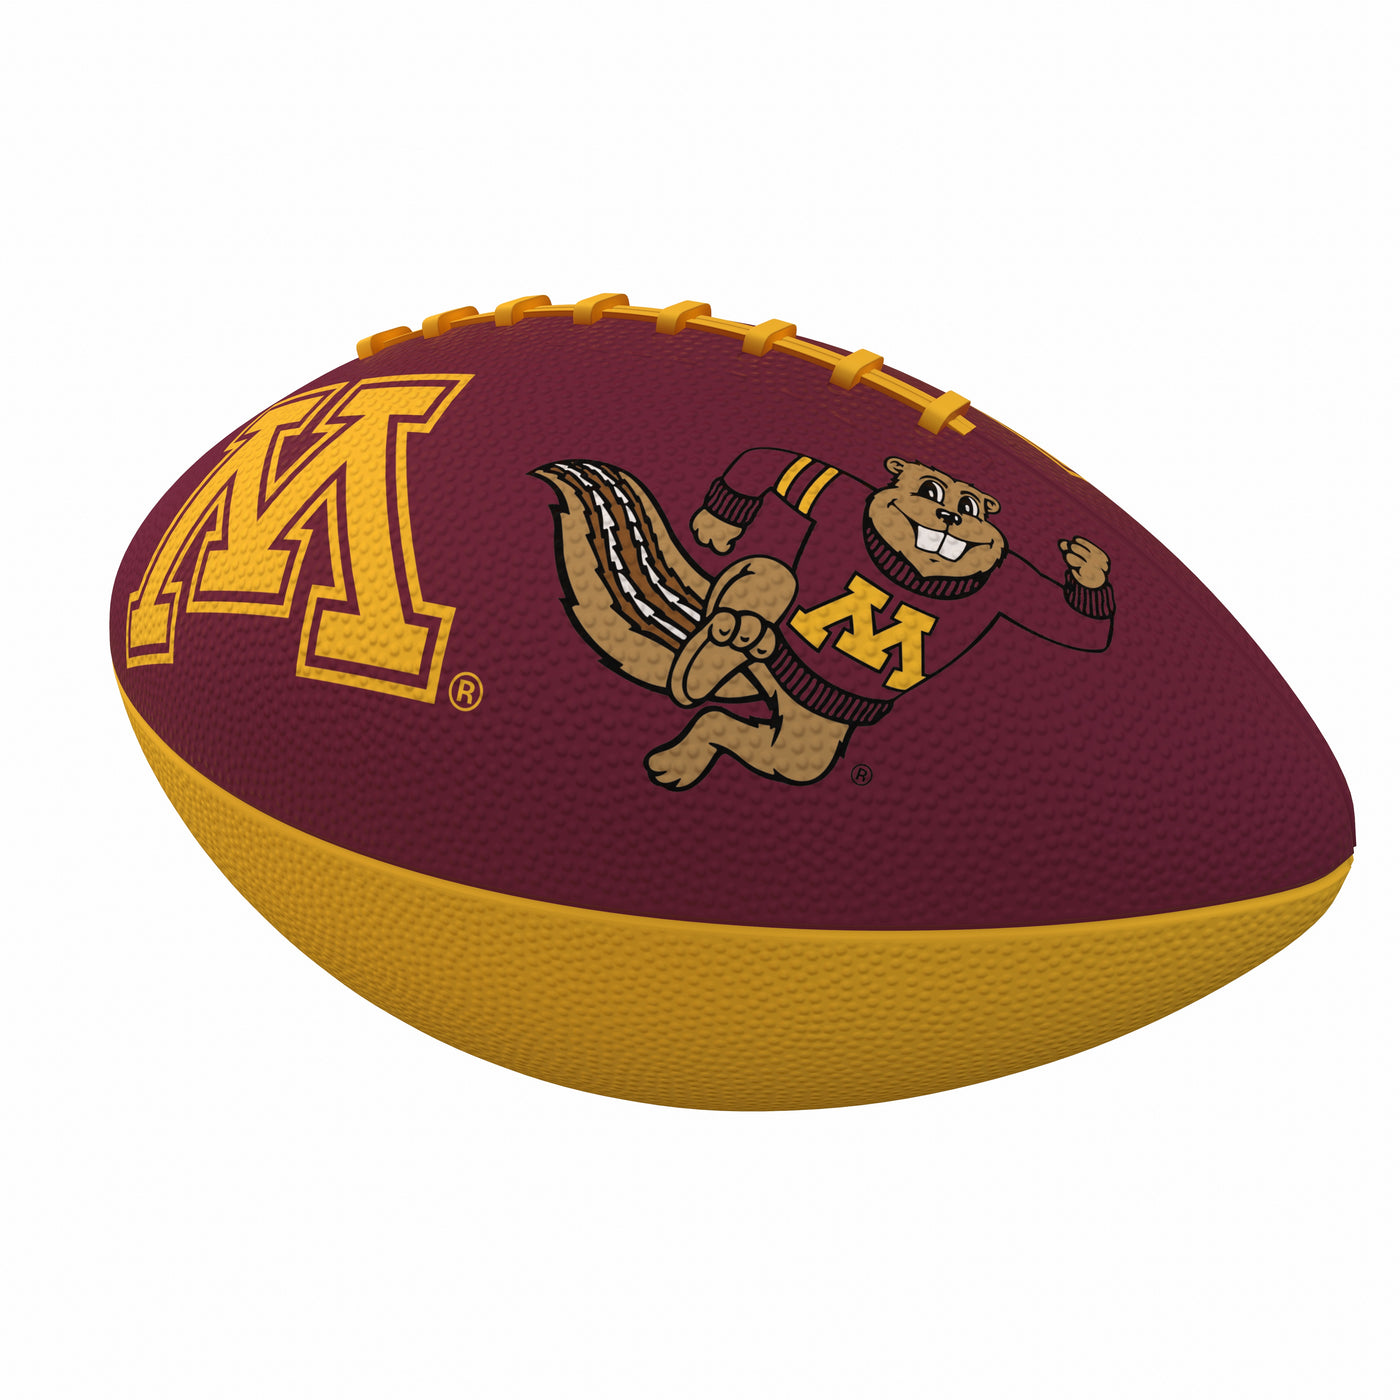 Minnesota Combo Logo Junior-Size Rubber Football